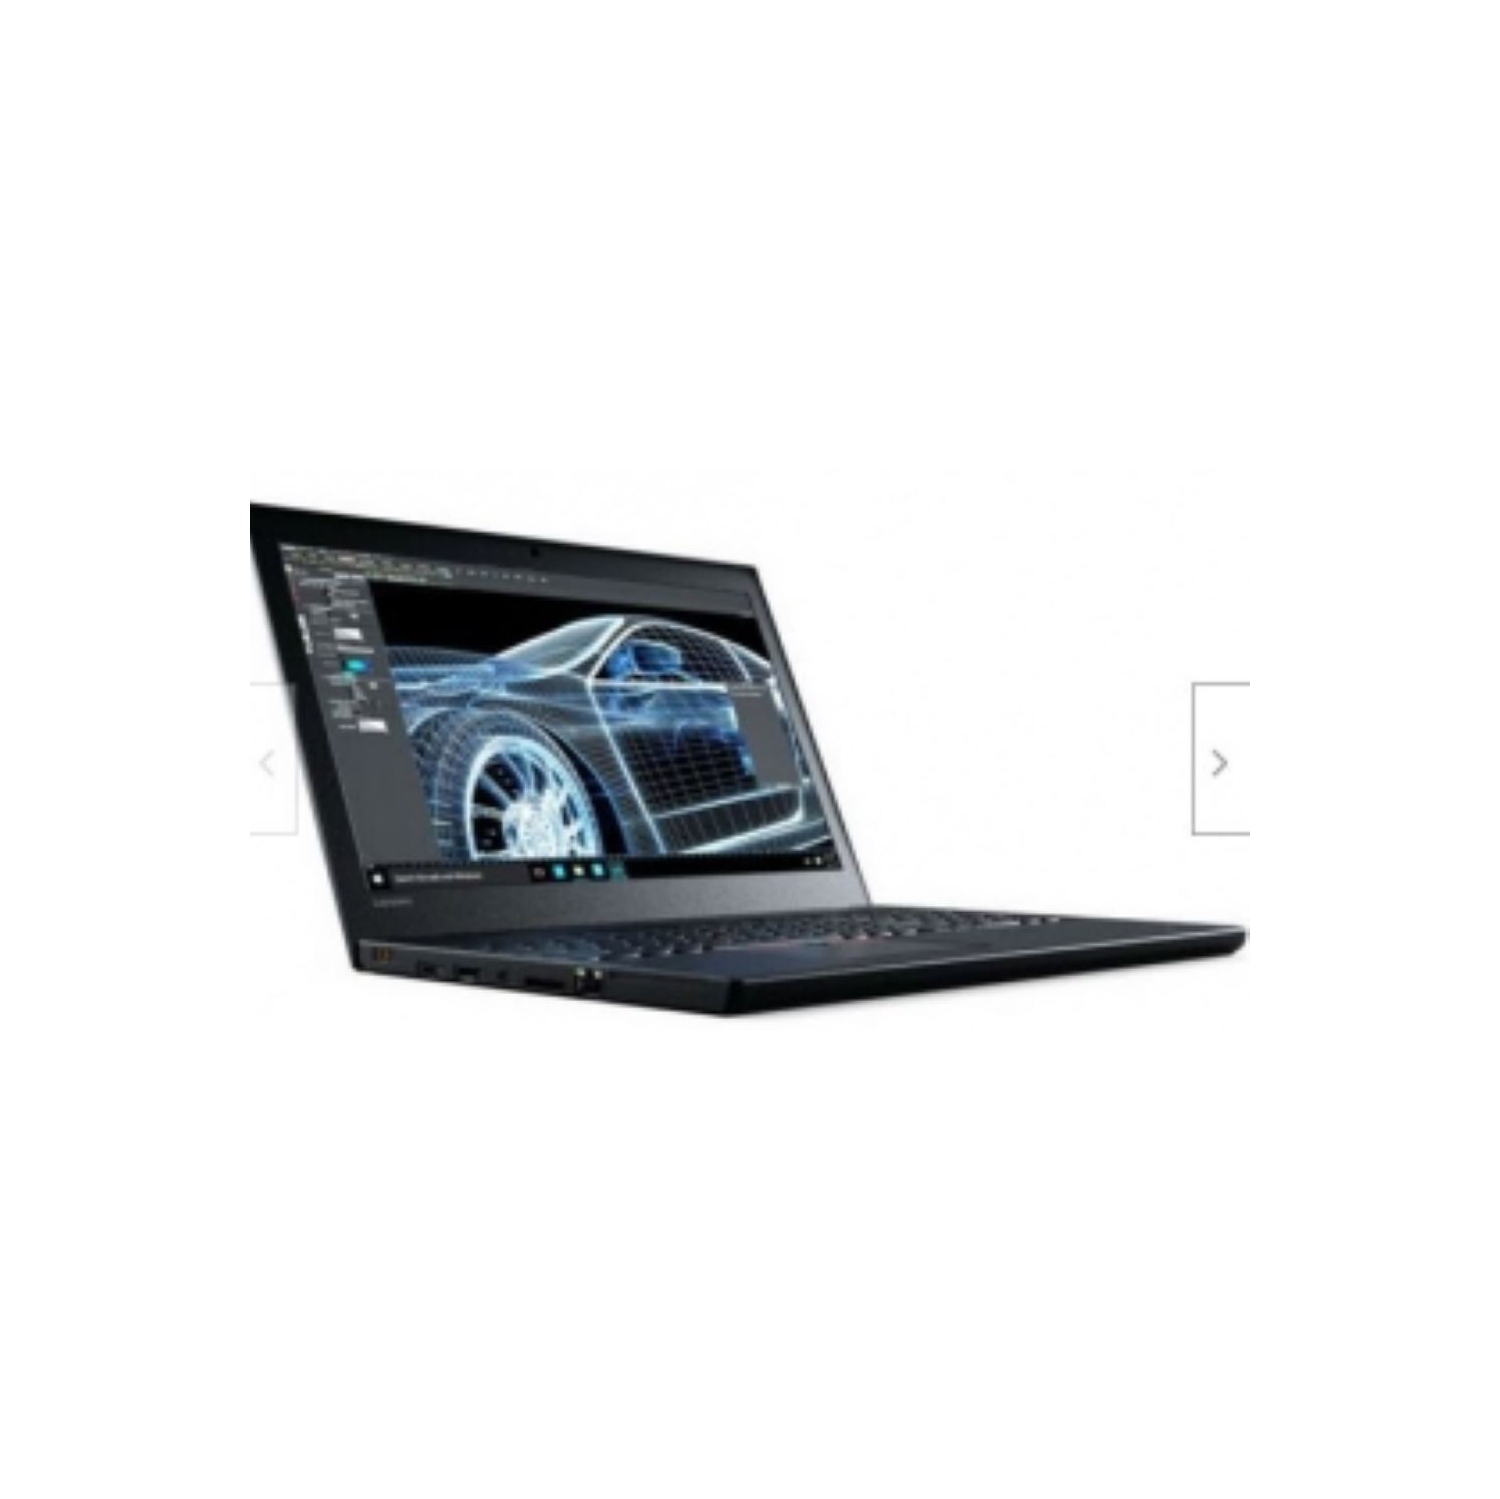 Refurbished (Good) Lenovo ThinkPad P52 WS Laptop Intel Core i7